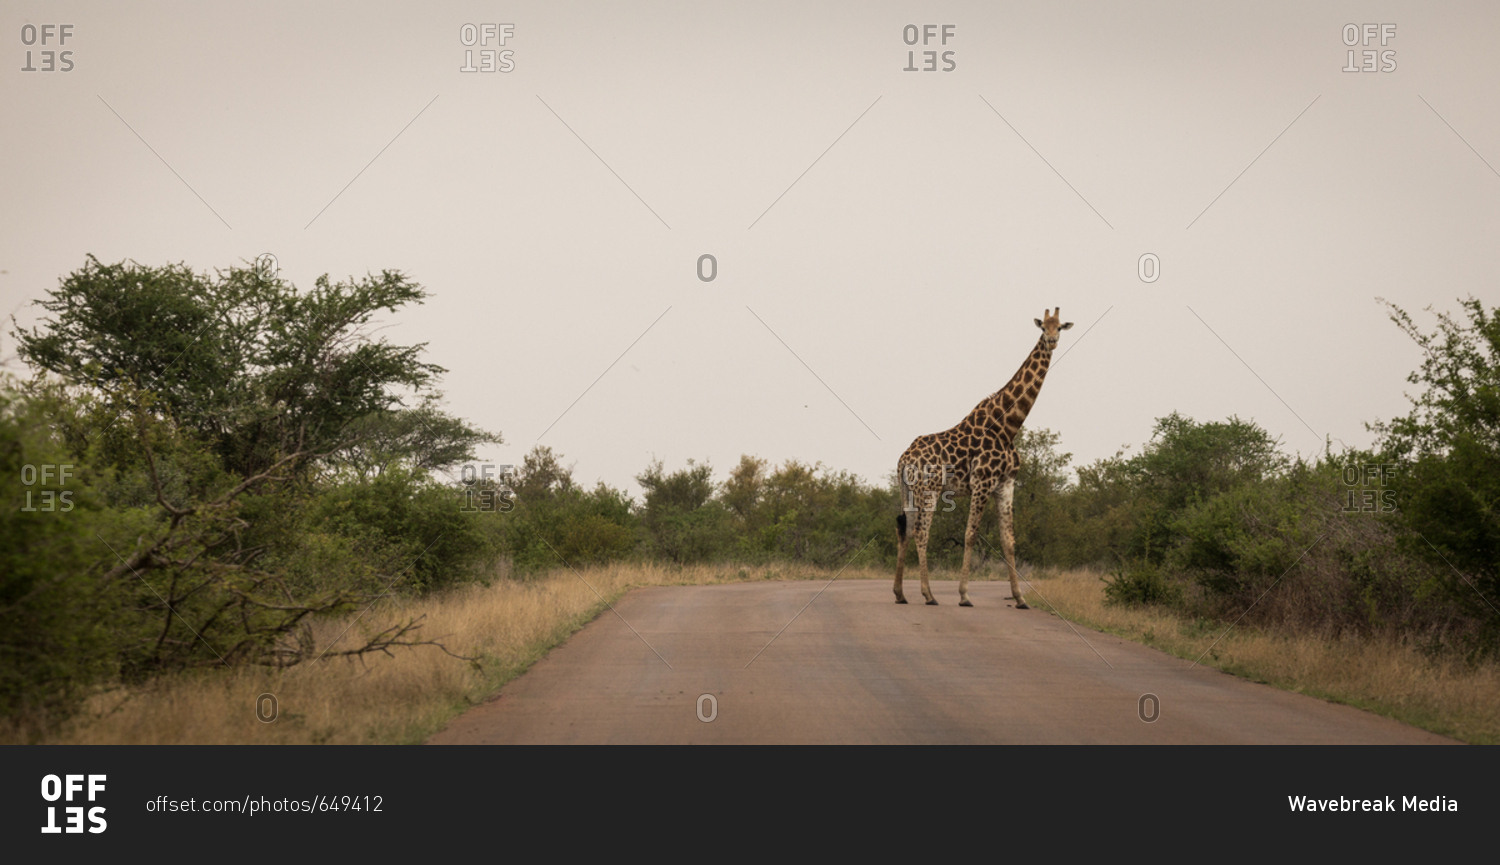 Giraffe on road in safari park